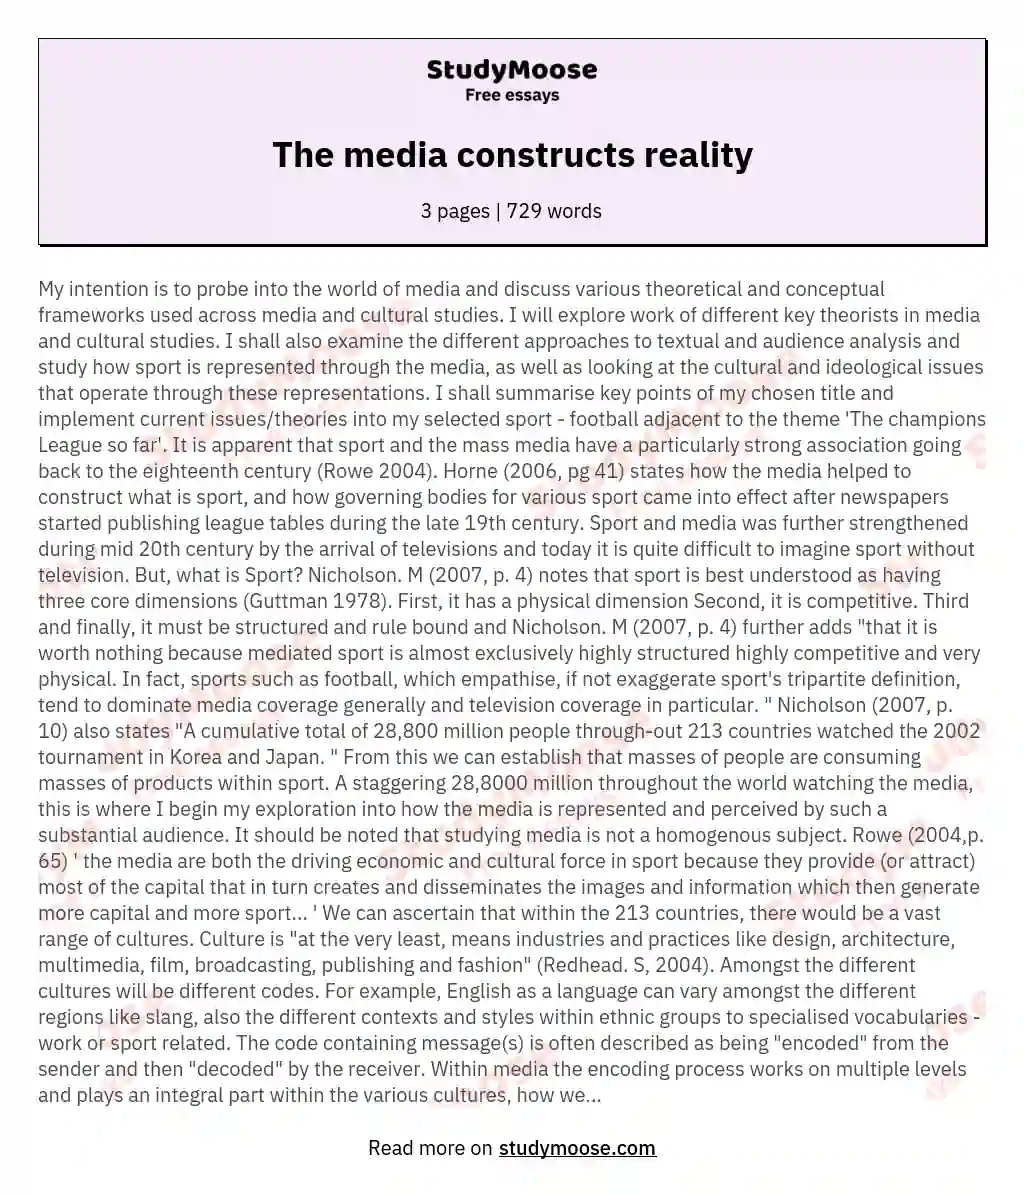 The media constructs reality essay